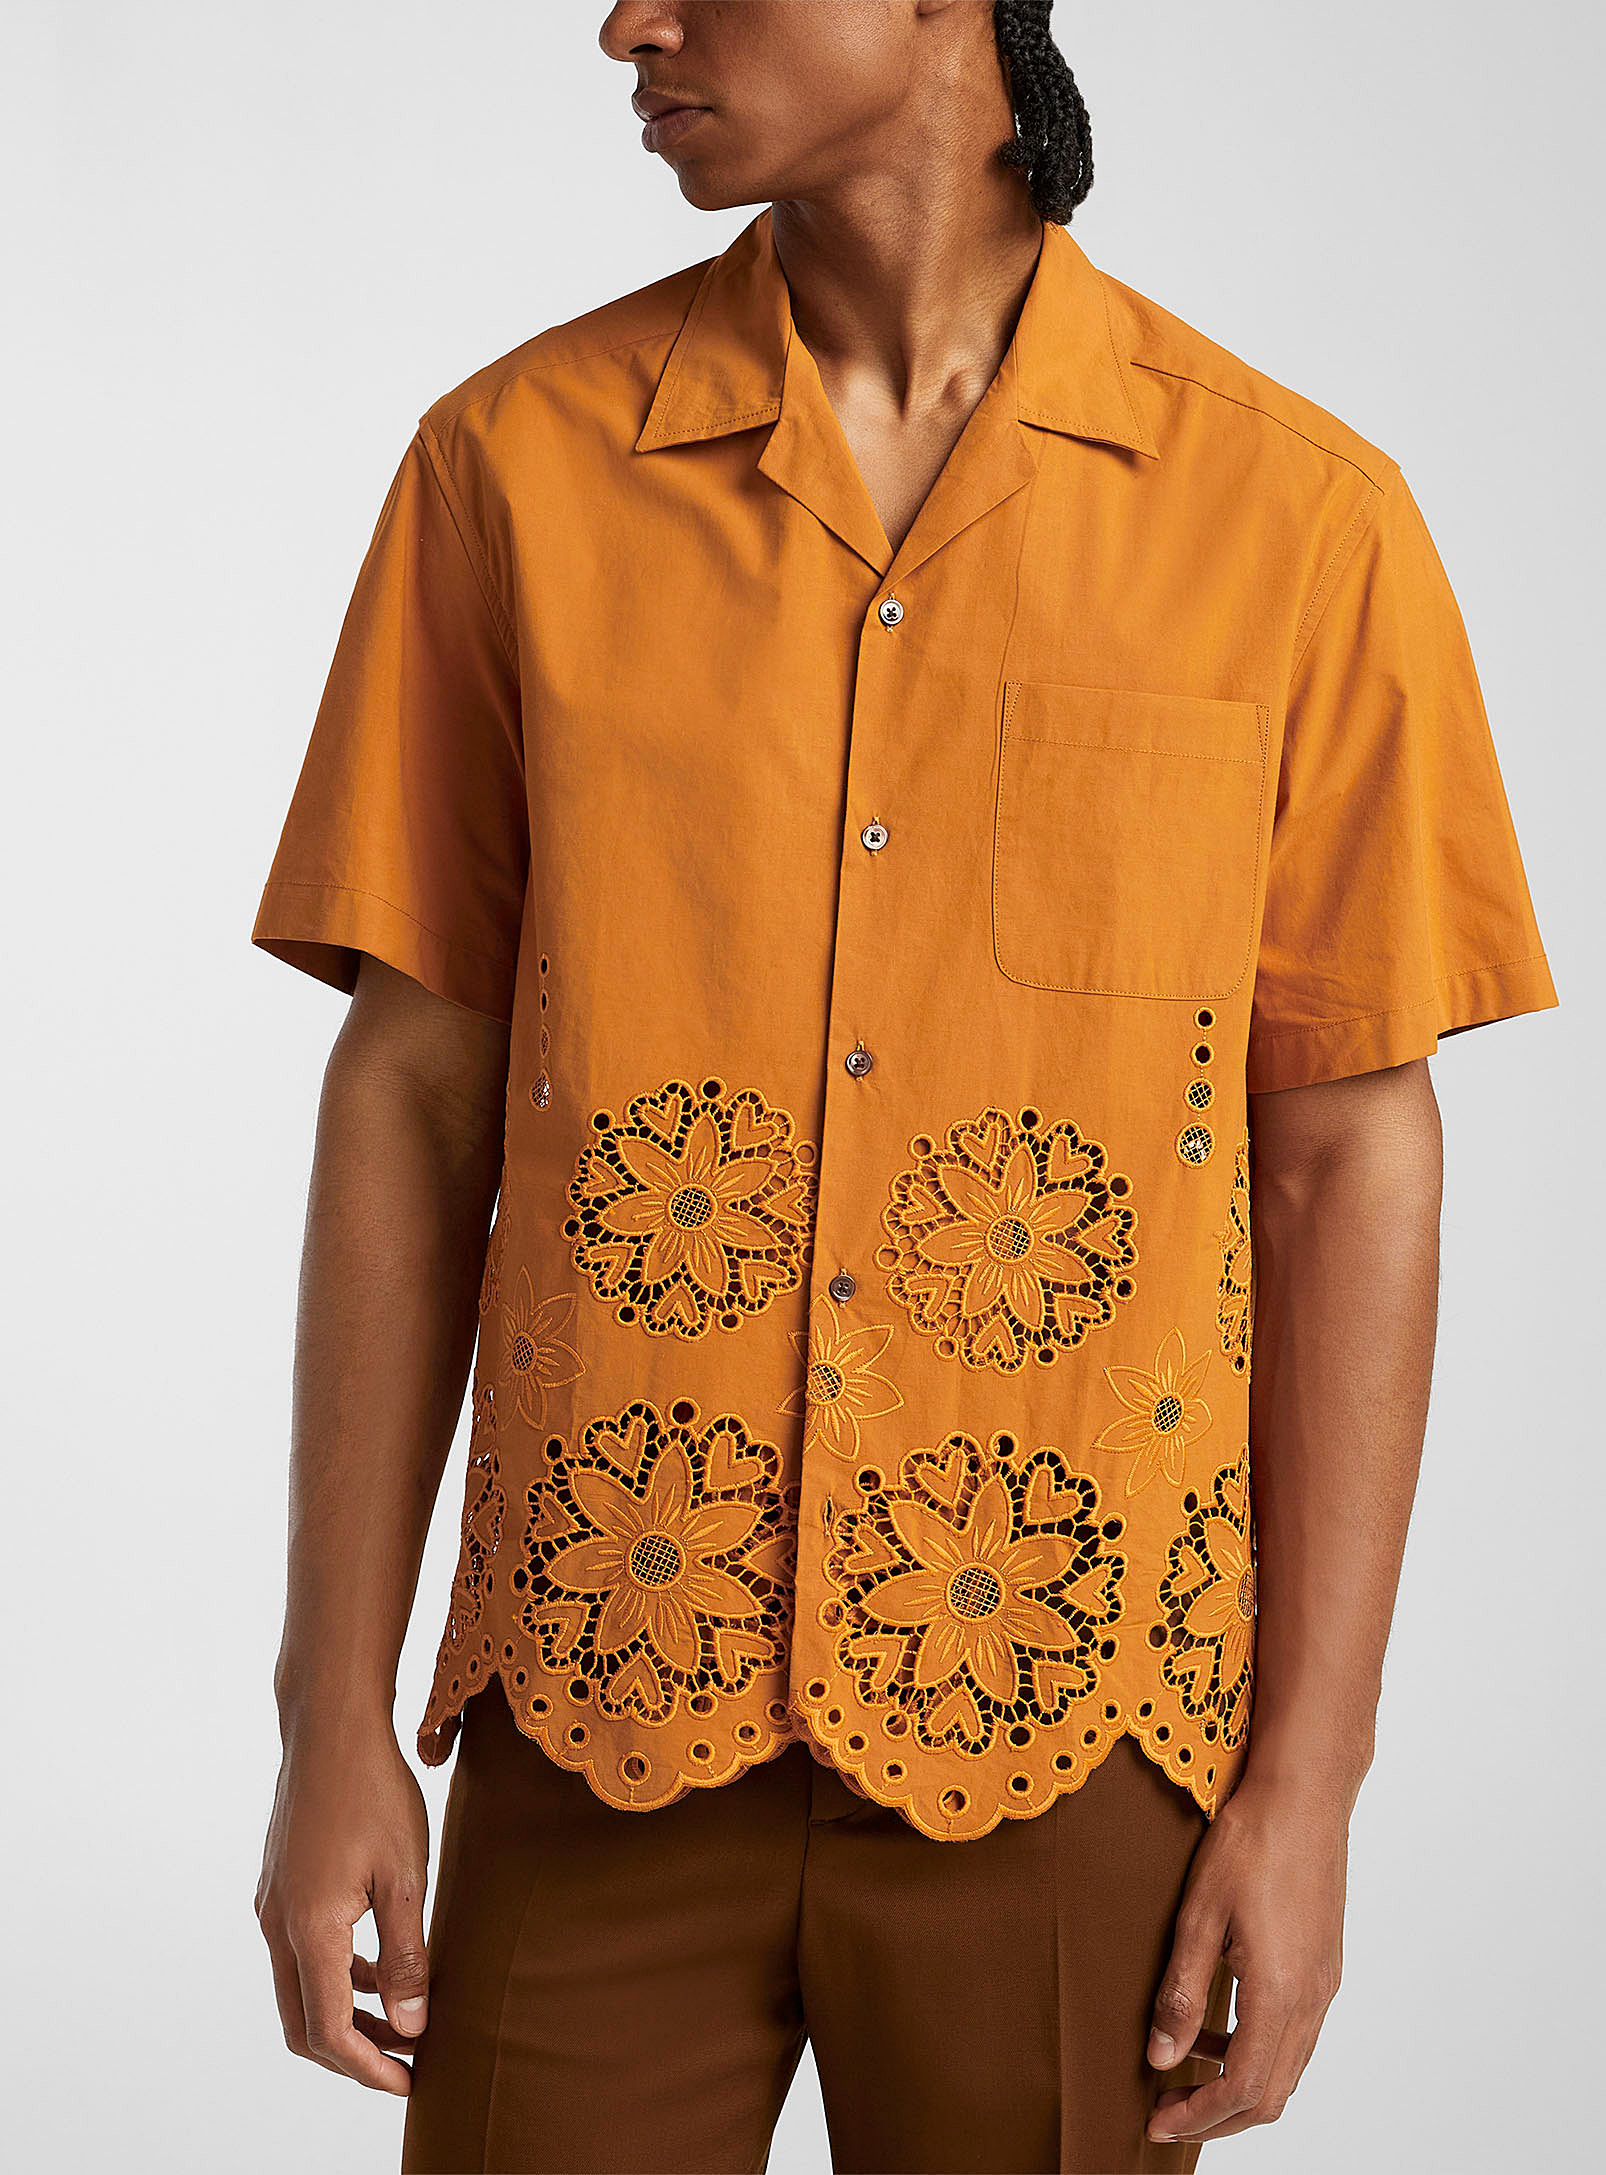 Cmmn Swdn - Men's Floral lace poplin shirt